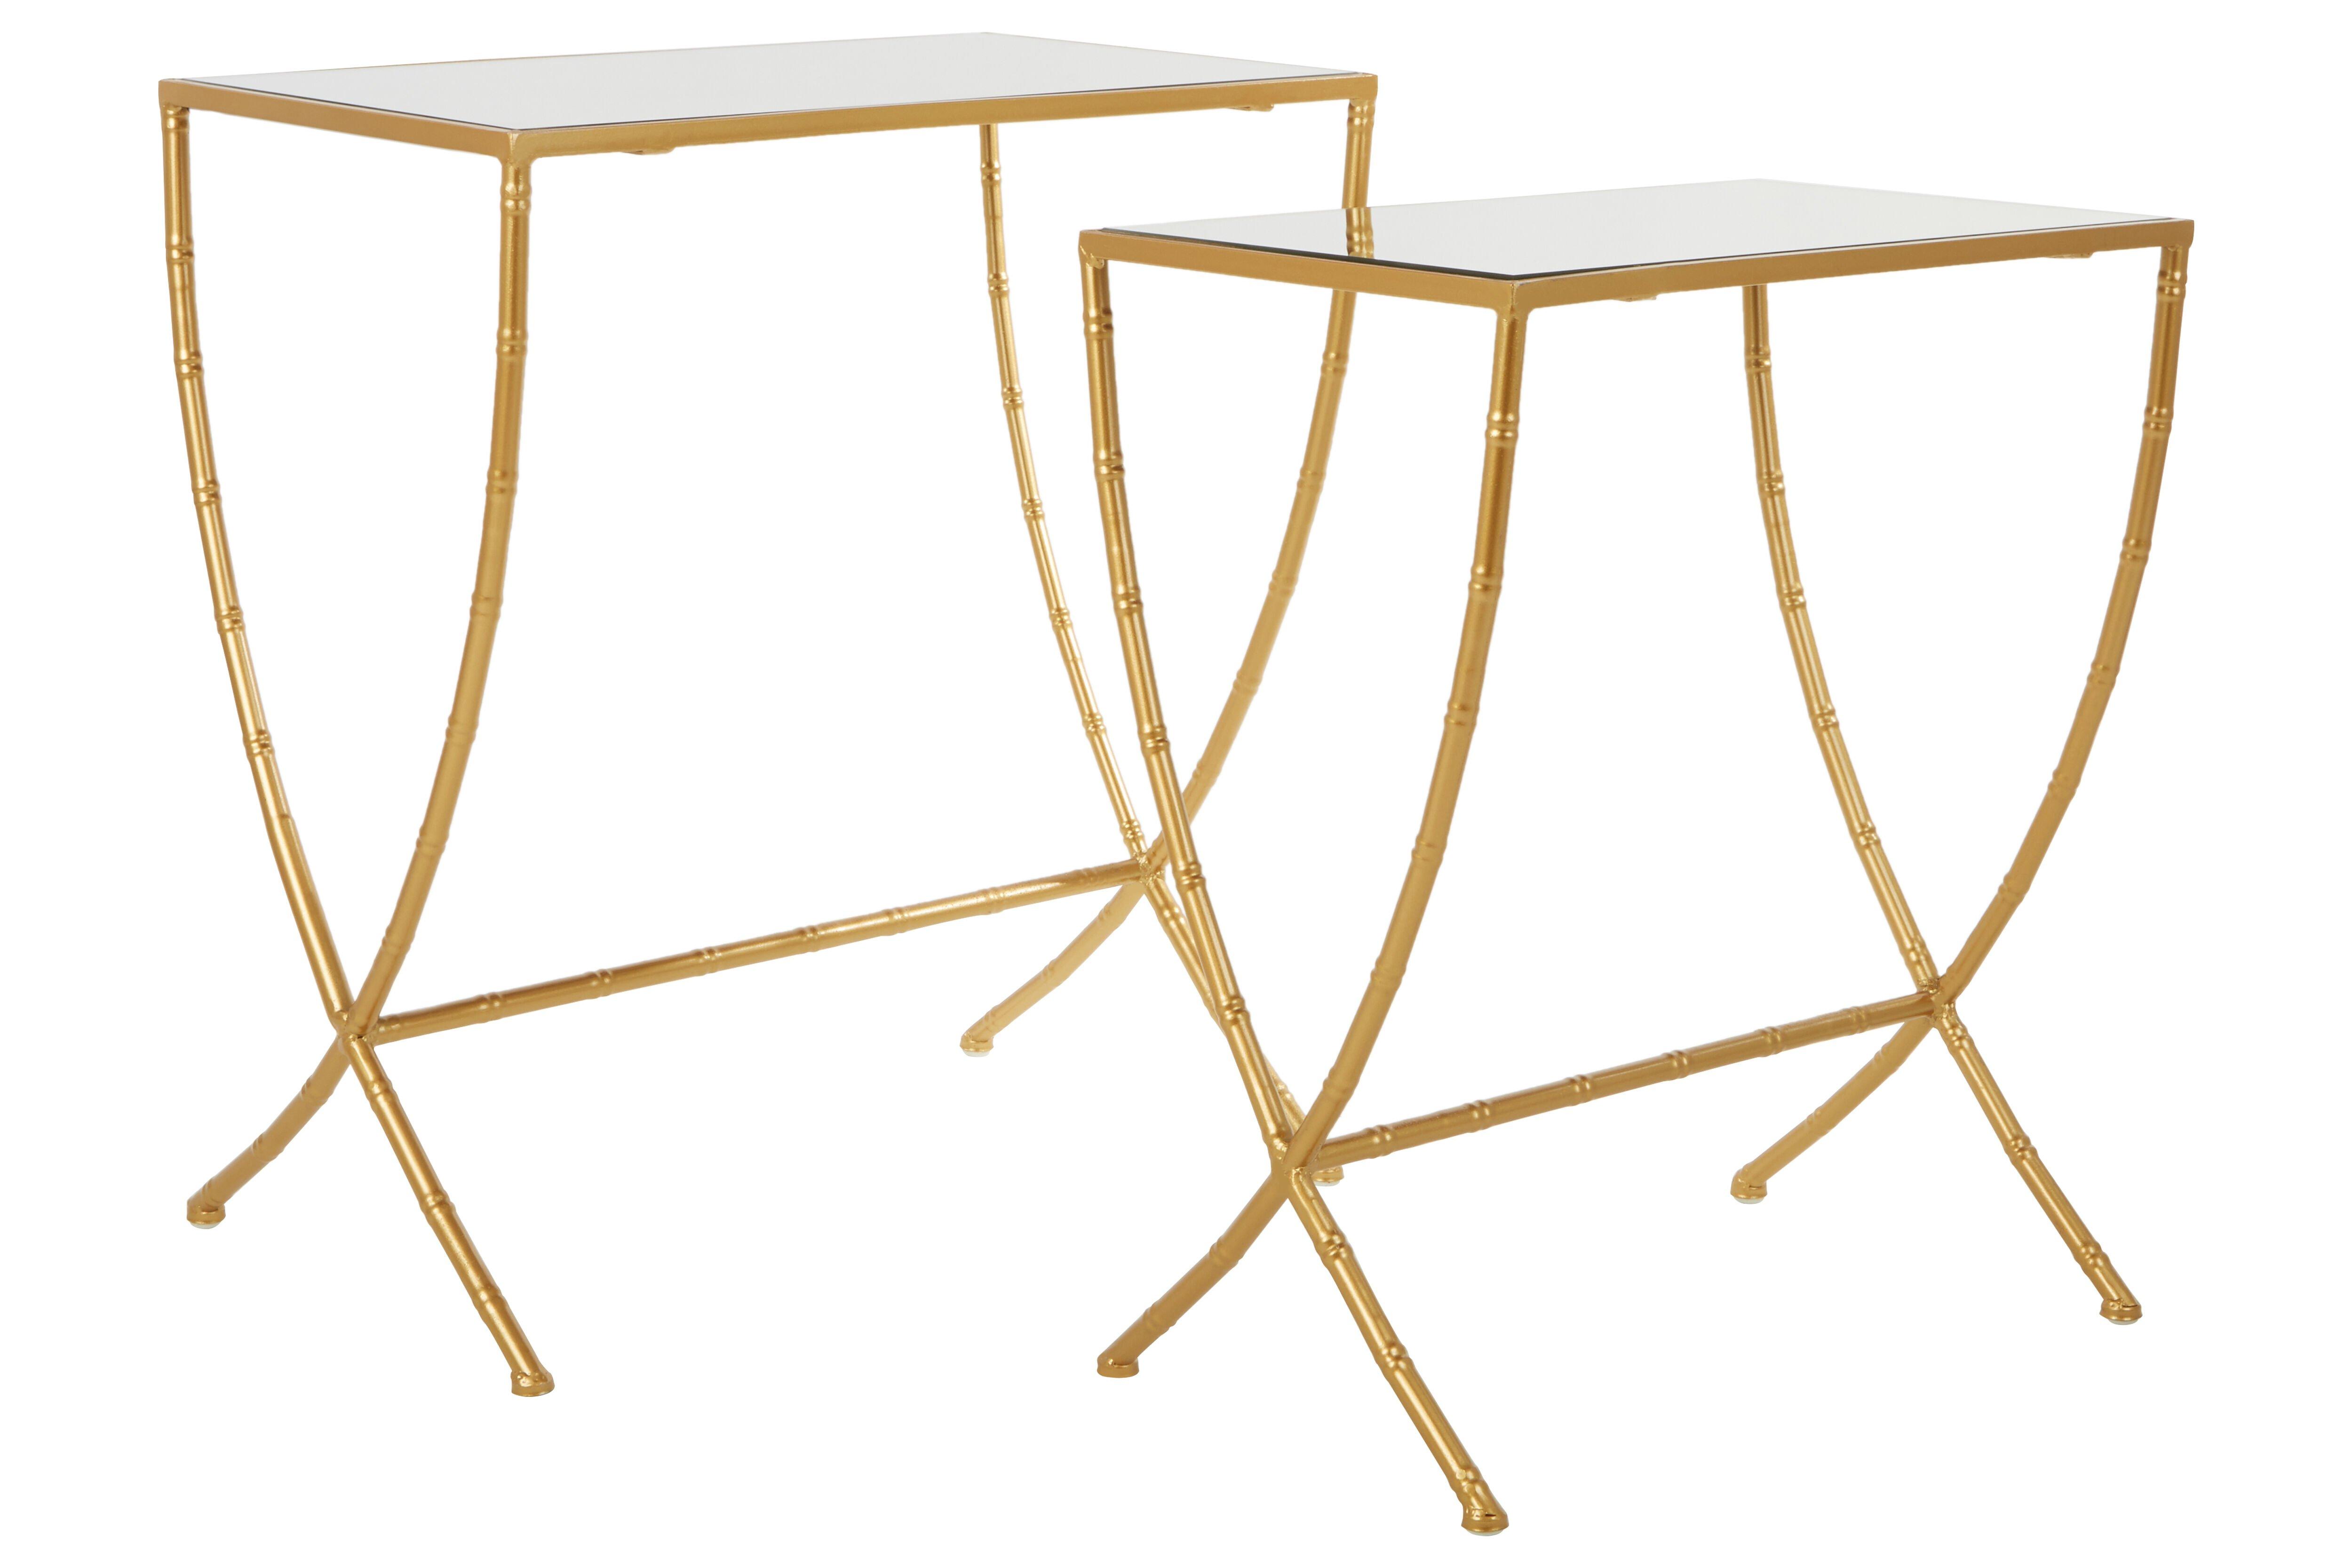 Avantis Set Of 2 Bamboo Design Side Tables